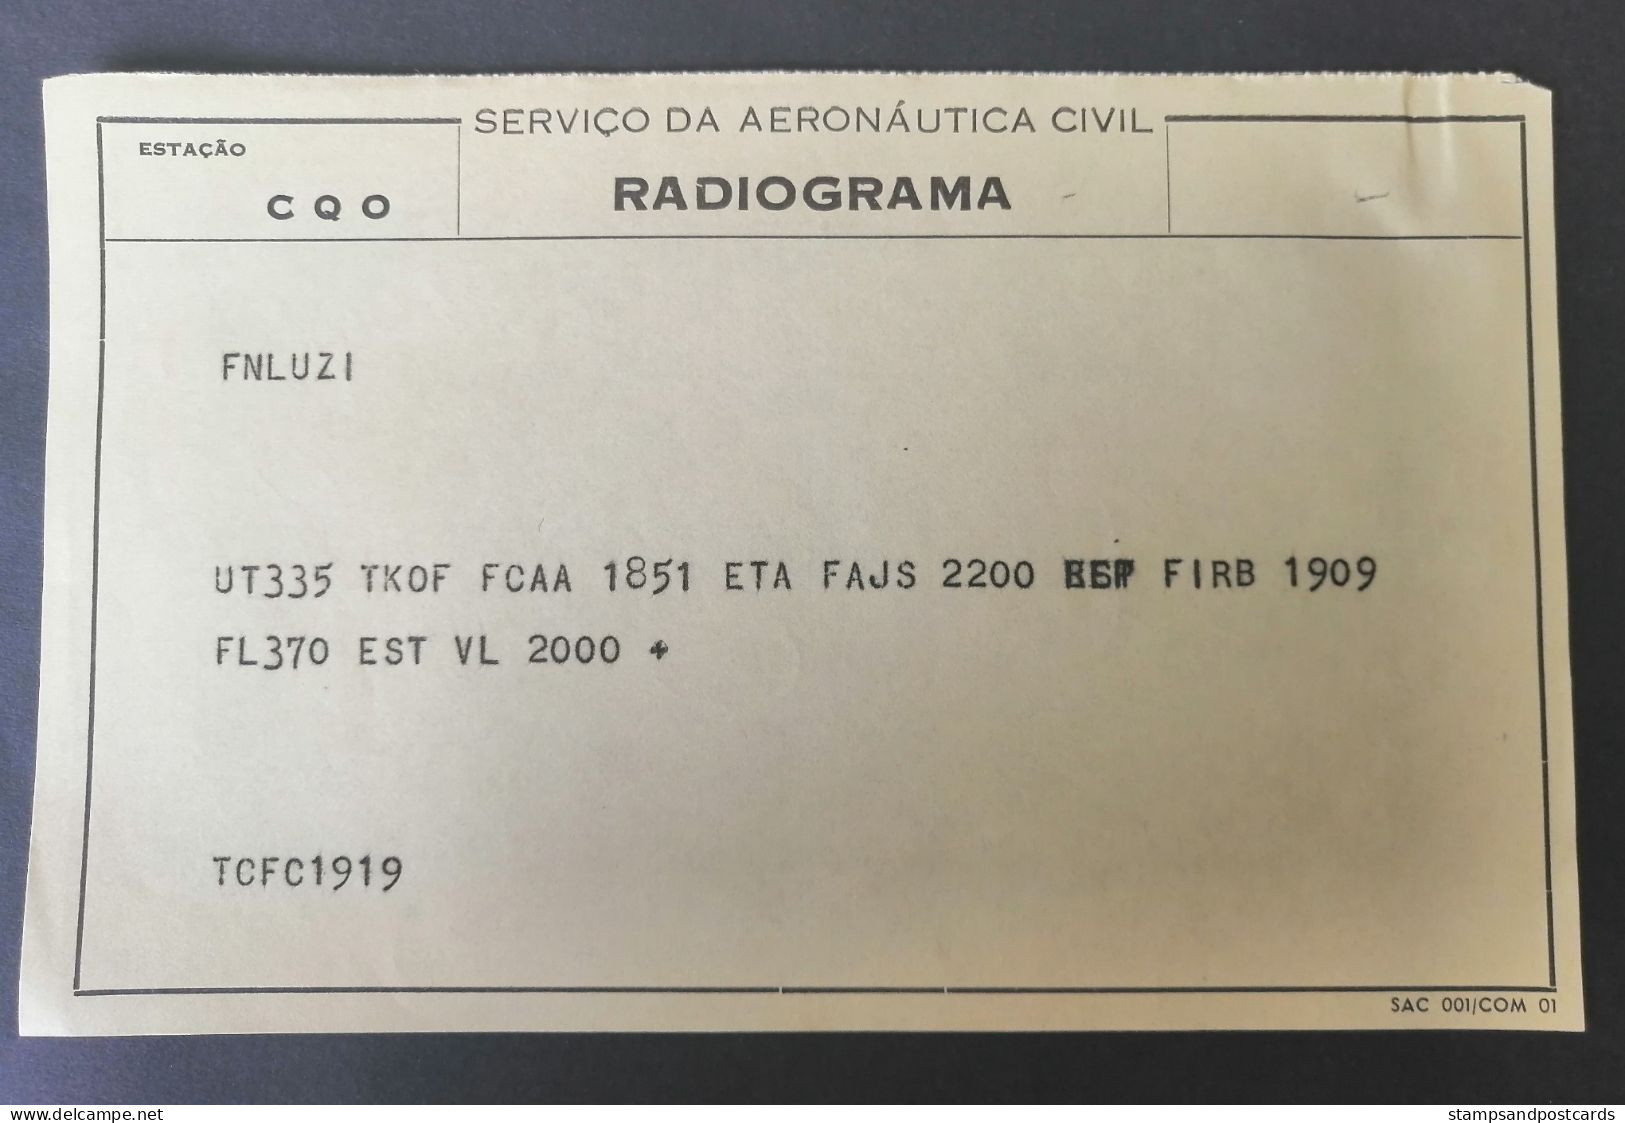 Portugal Radiograma C. 1970 Radiogramme Radiogram - Lettres & Documents